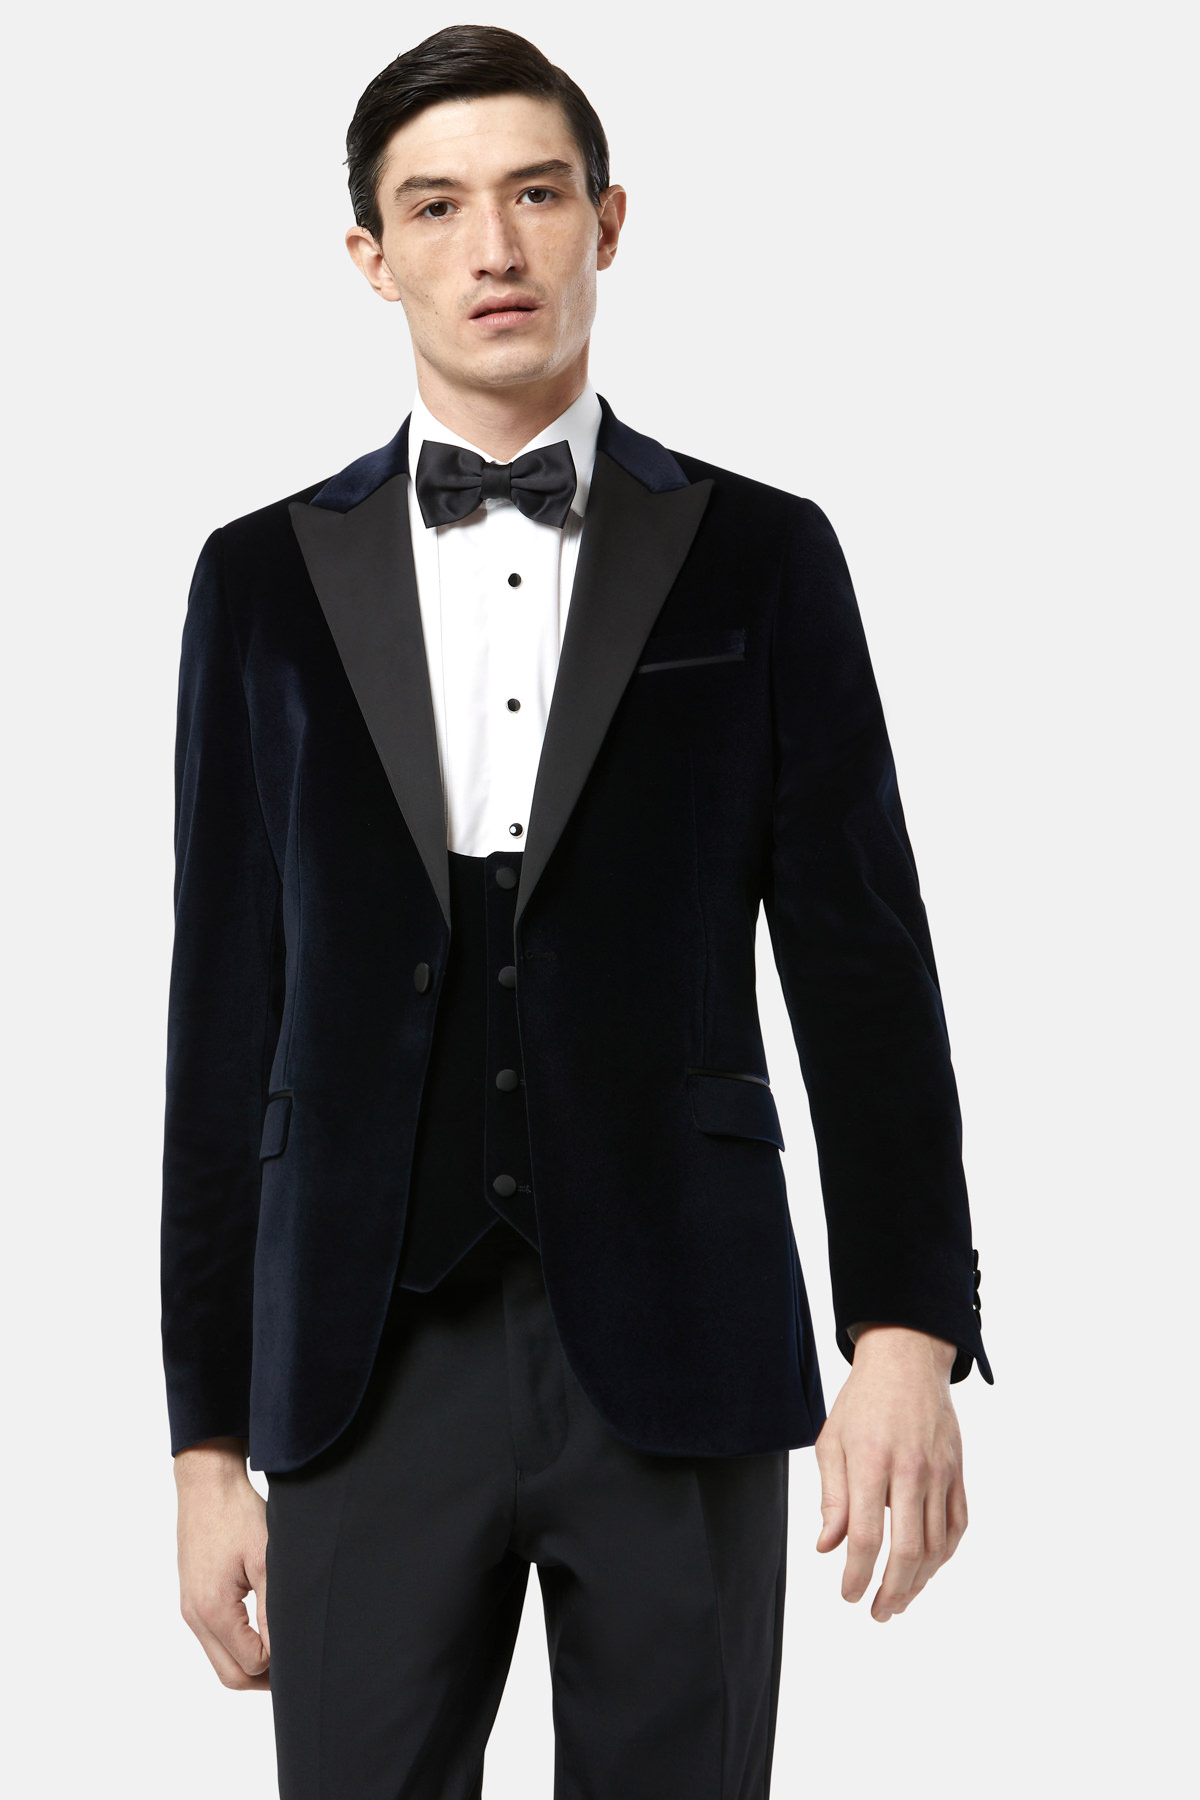 Jasper Navy Tuxedo - Tom Murphy's Formal and Menswear